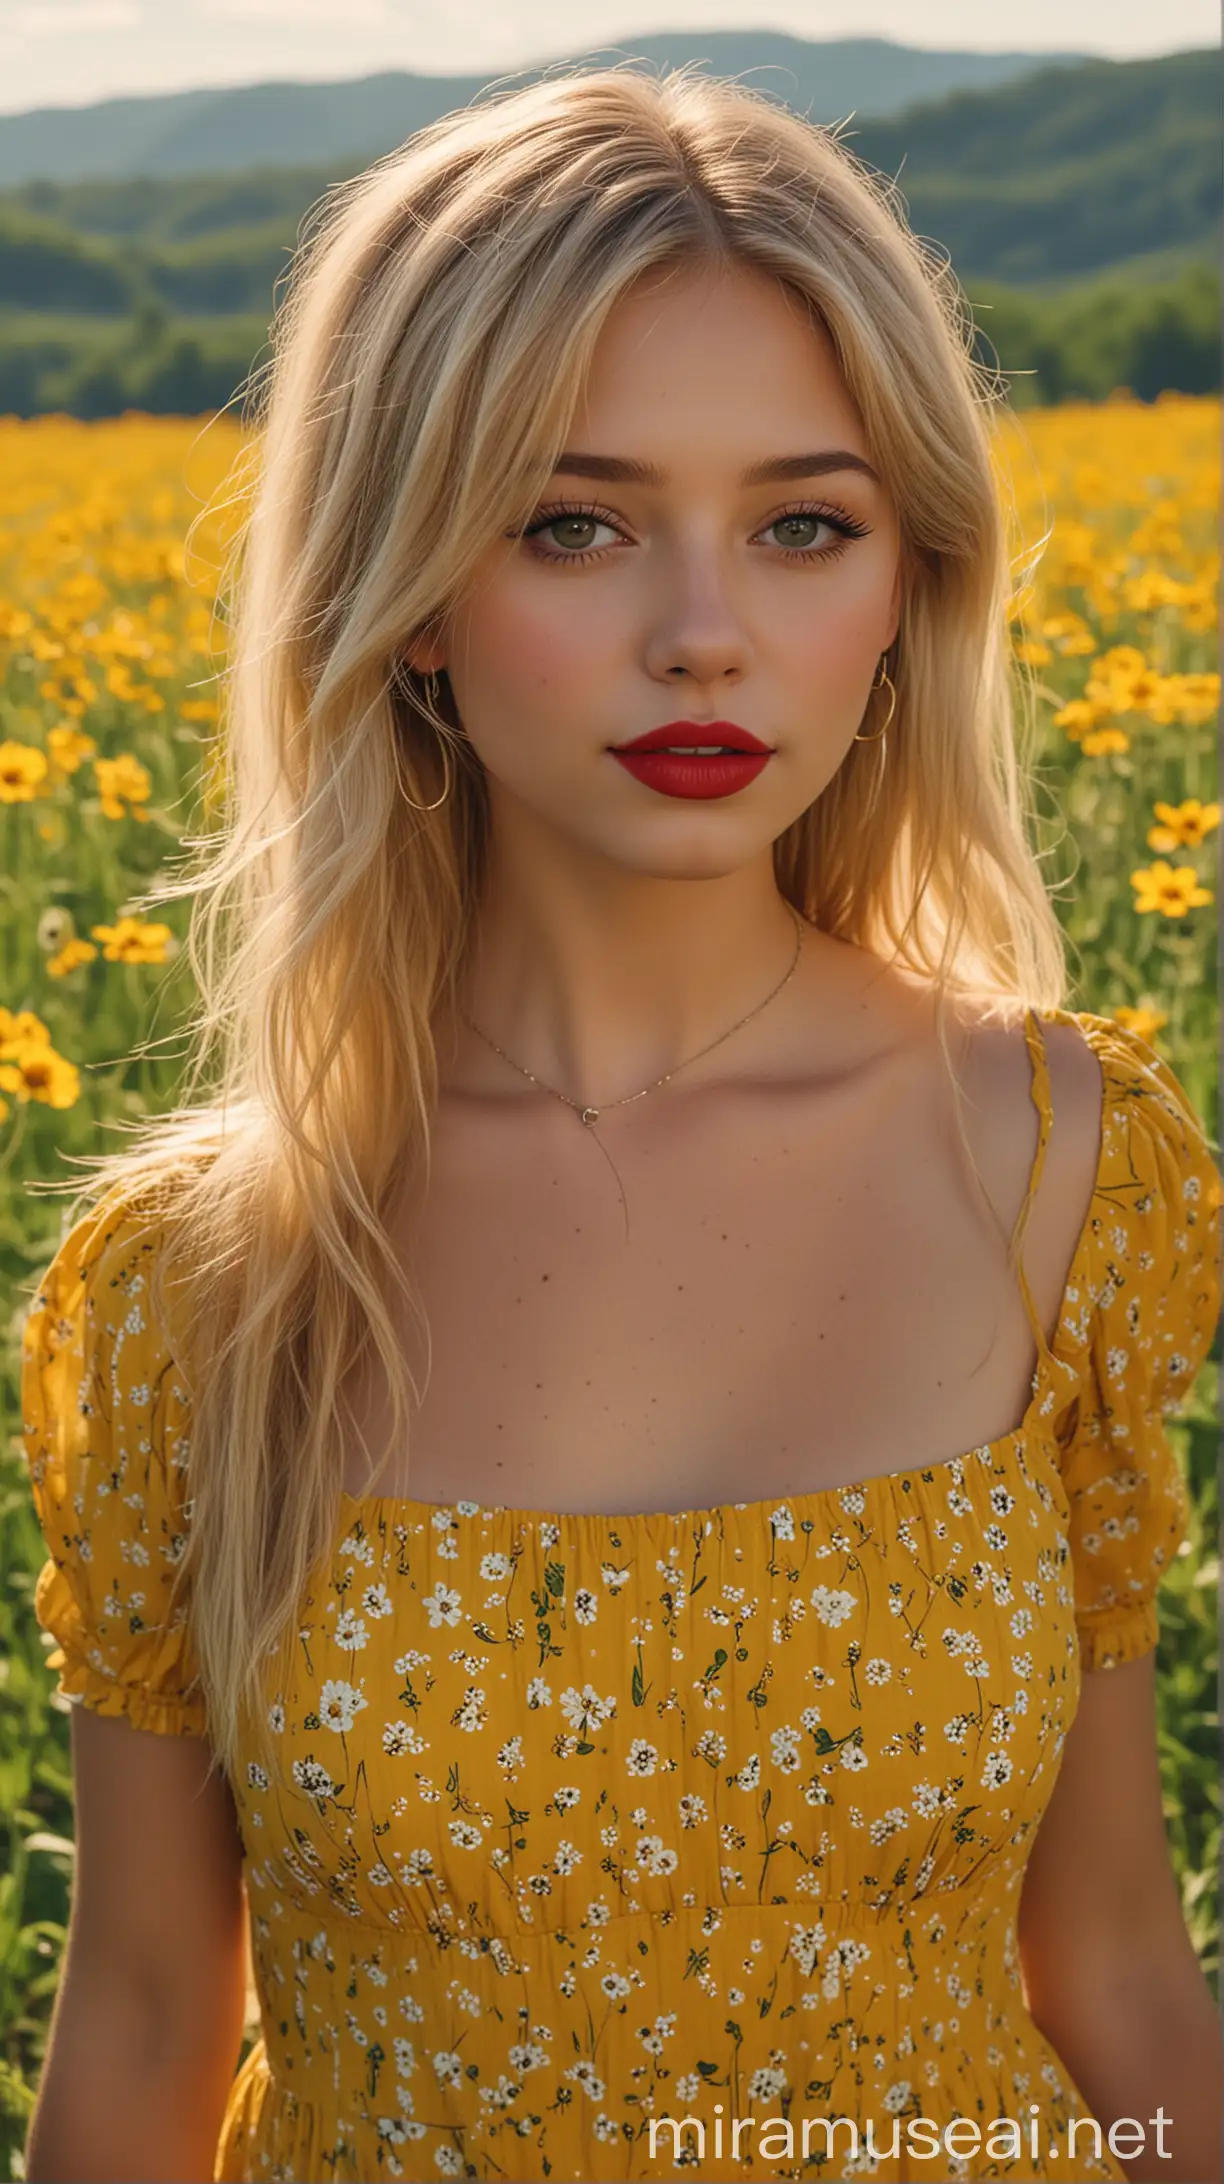 4k Ai art front view beautiful USA girl golden hair red lipstick nose ring ear tops yellow dress in usa wildflower fields